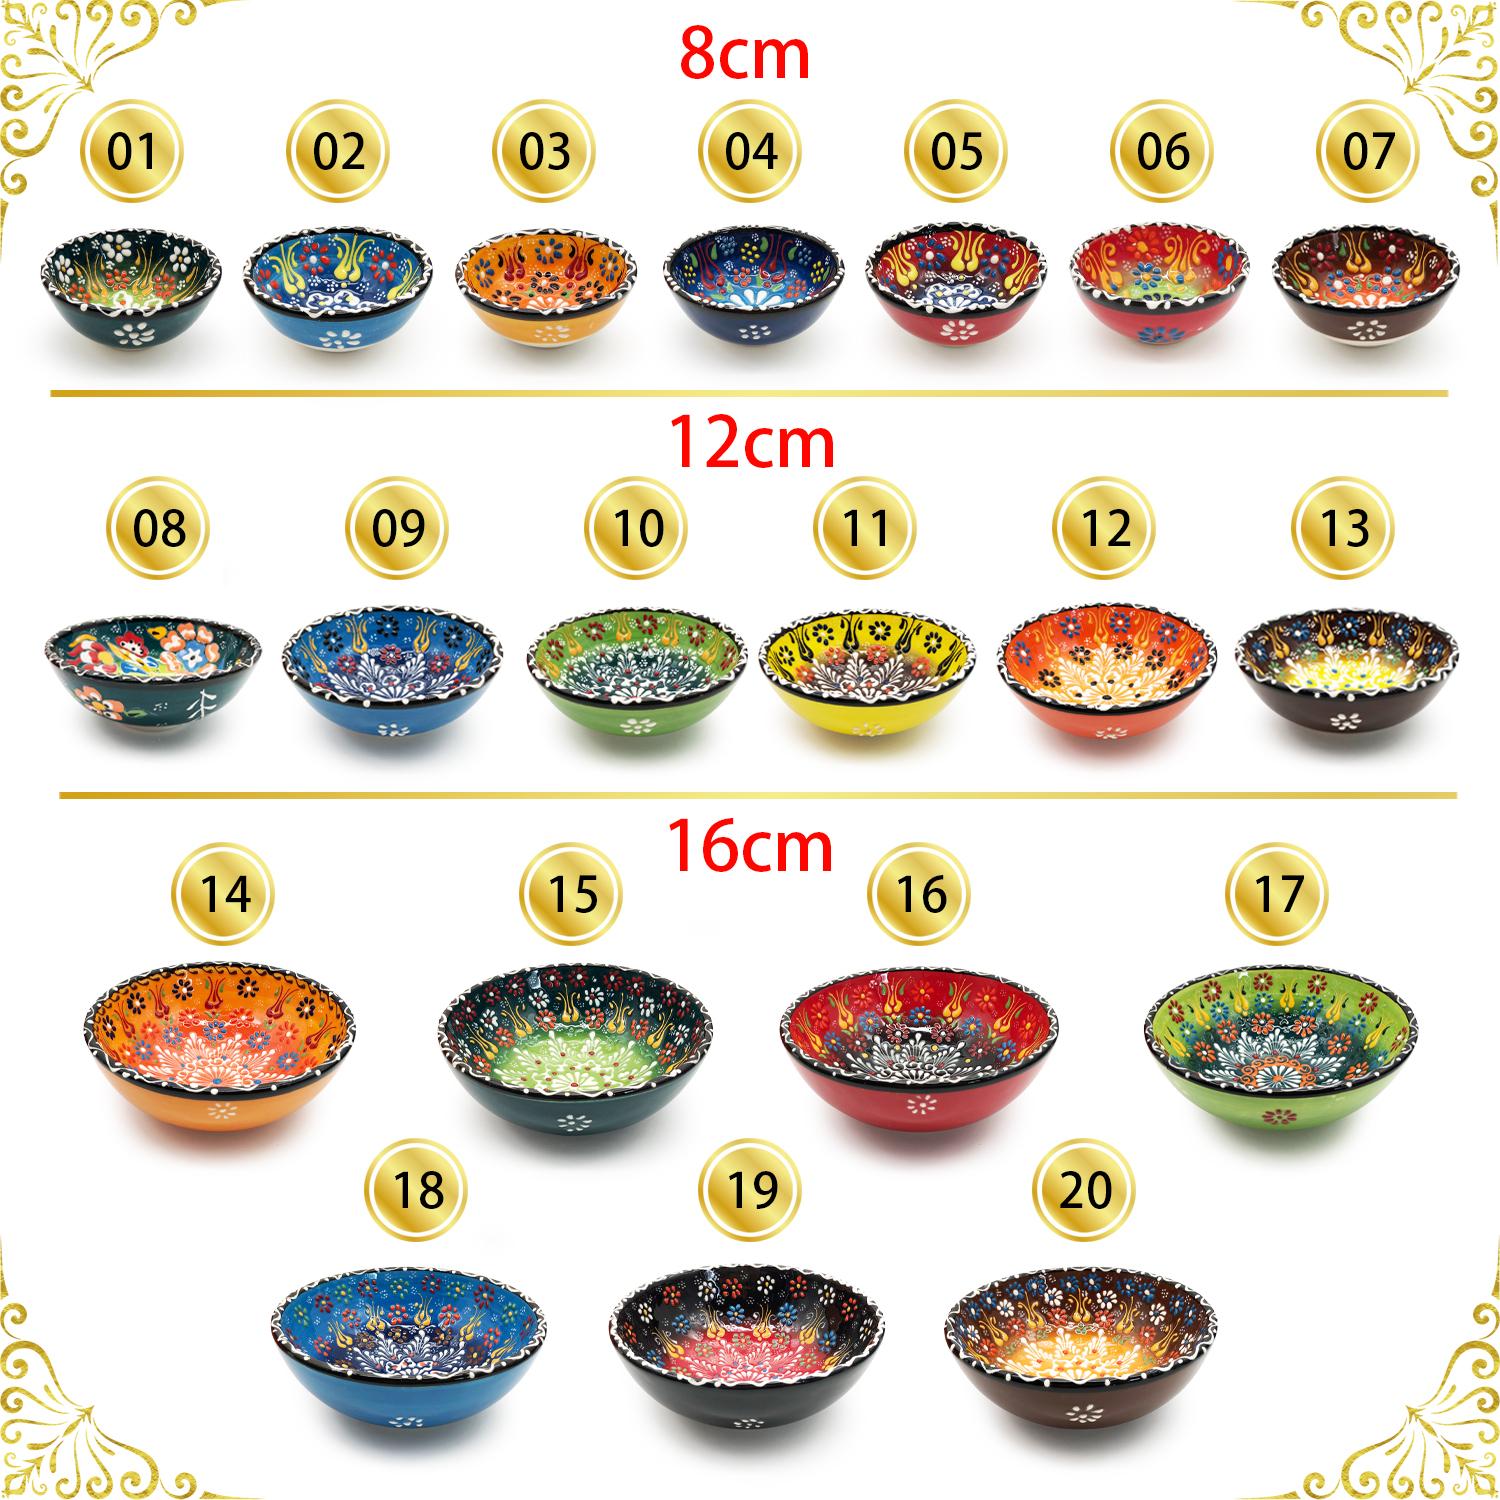 160MM手繪土耳其傳統工藝陶瓷碗， 土耳其餐具奧斯曼帝國浮雕圖案土耳其藝術時尚潮物(VTR-CERAMIC-BOWL-160MM-30206)